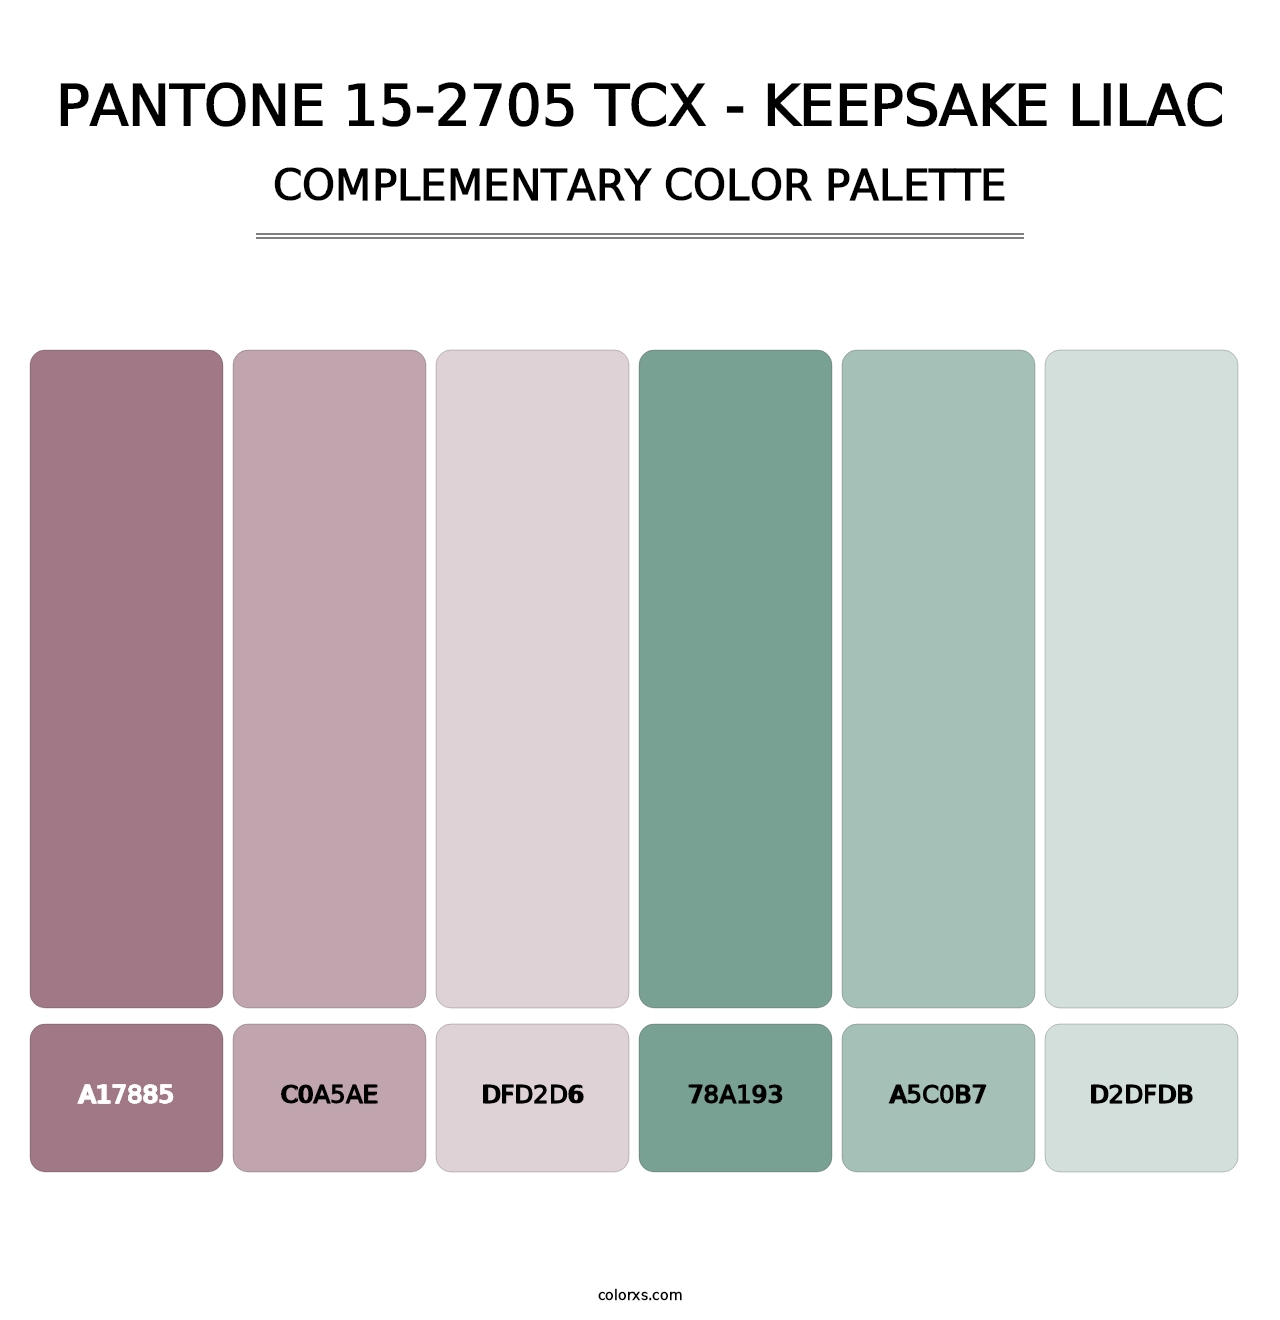 PANTONE 15-2705 TCX - Keepsake Lilac - Complementary Color Palette